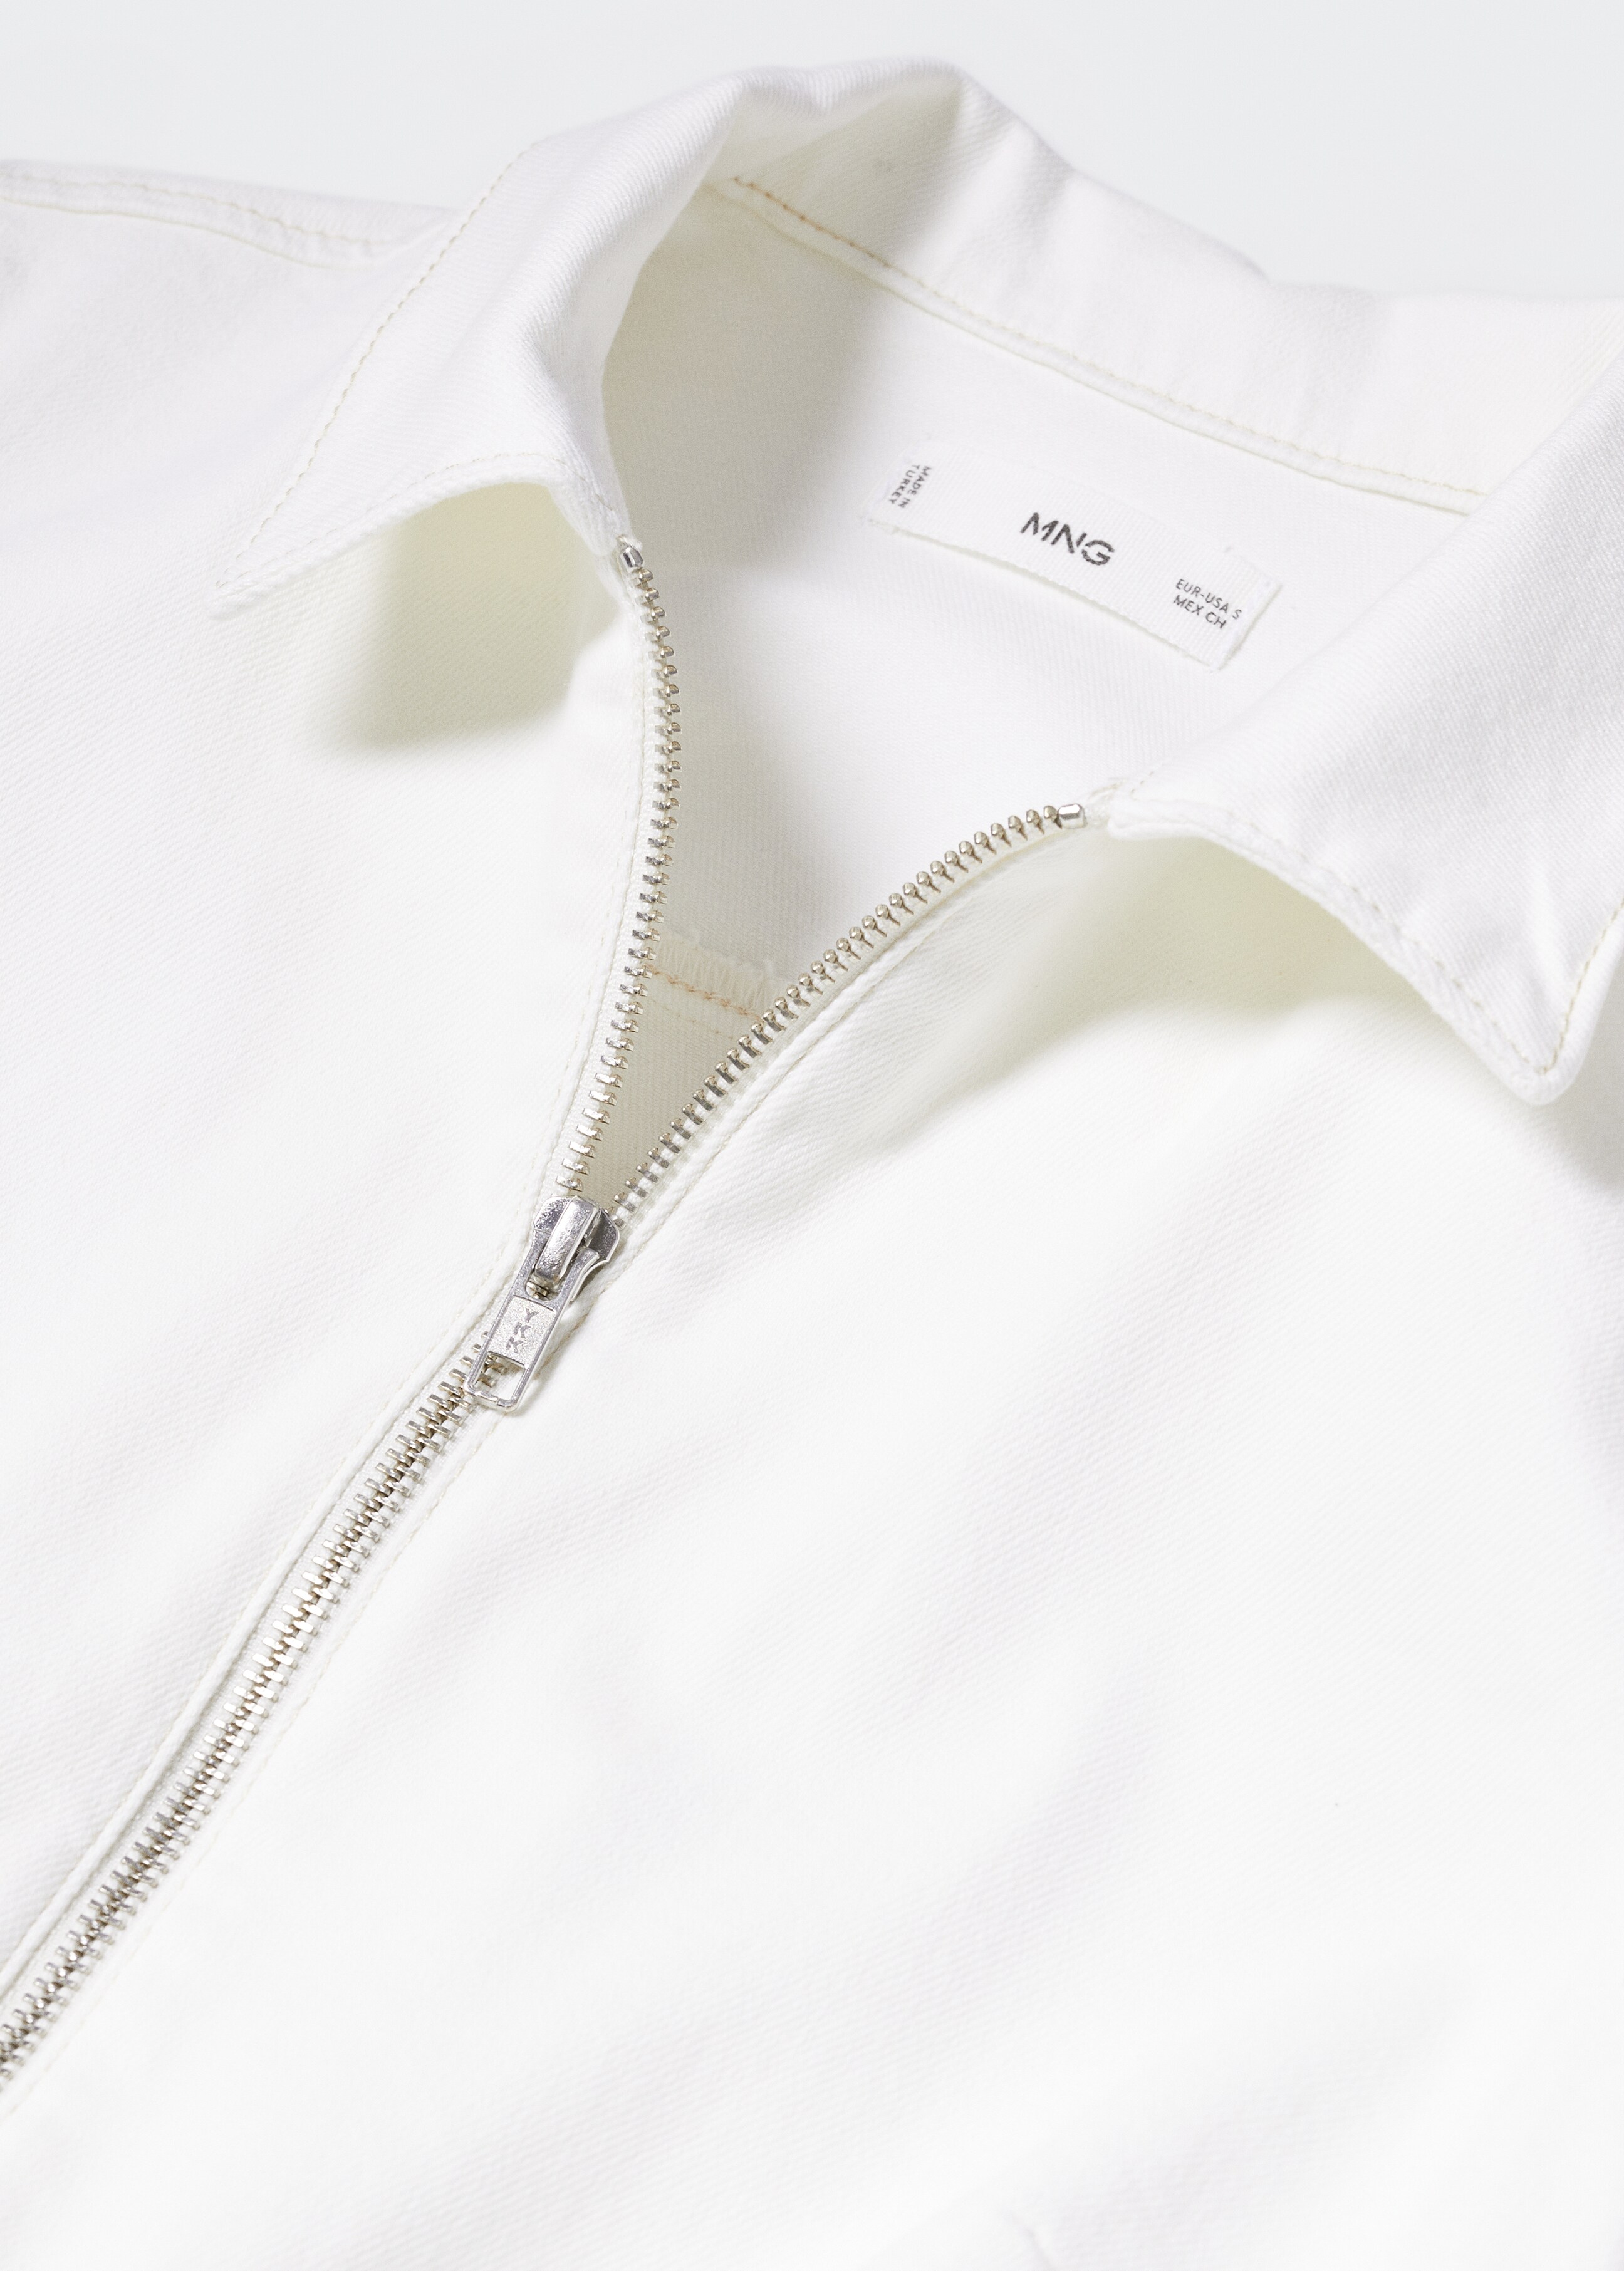 Denim jumpsuit with zipper - Details of the article 8